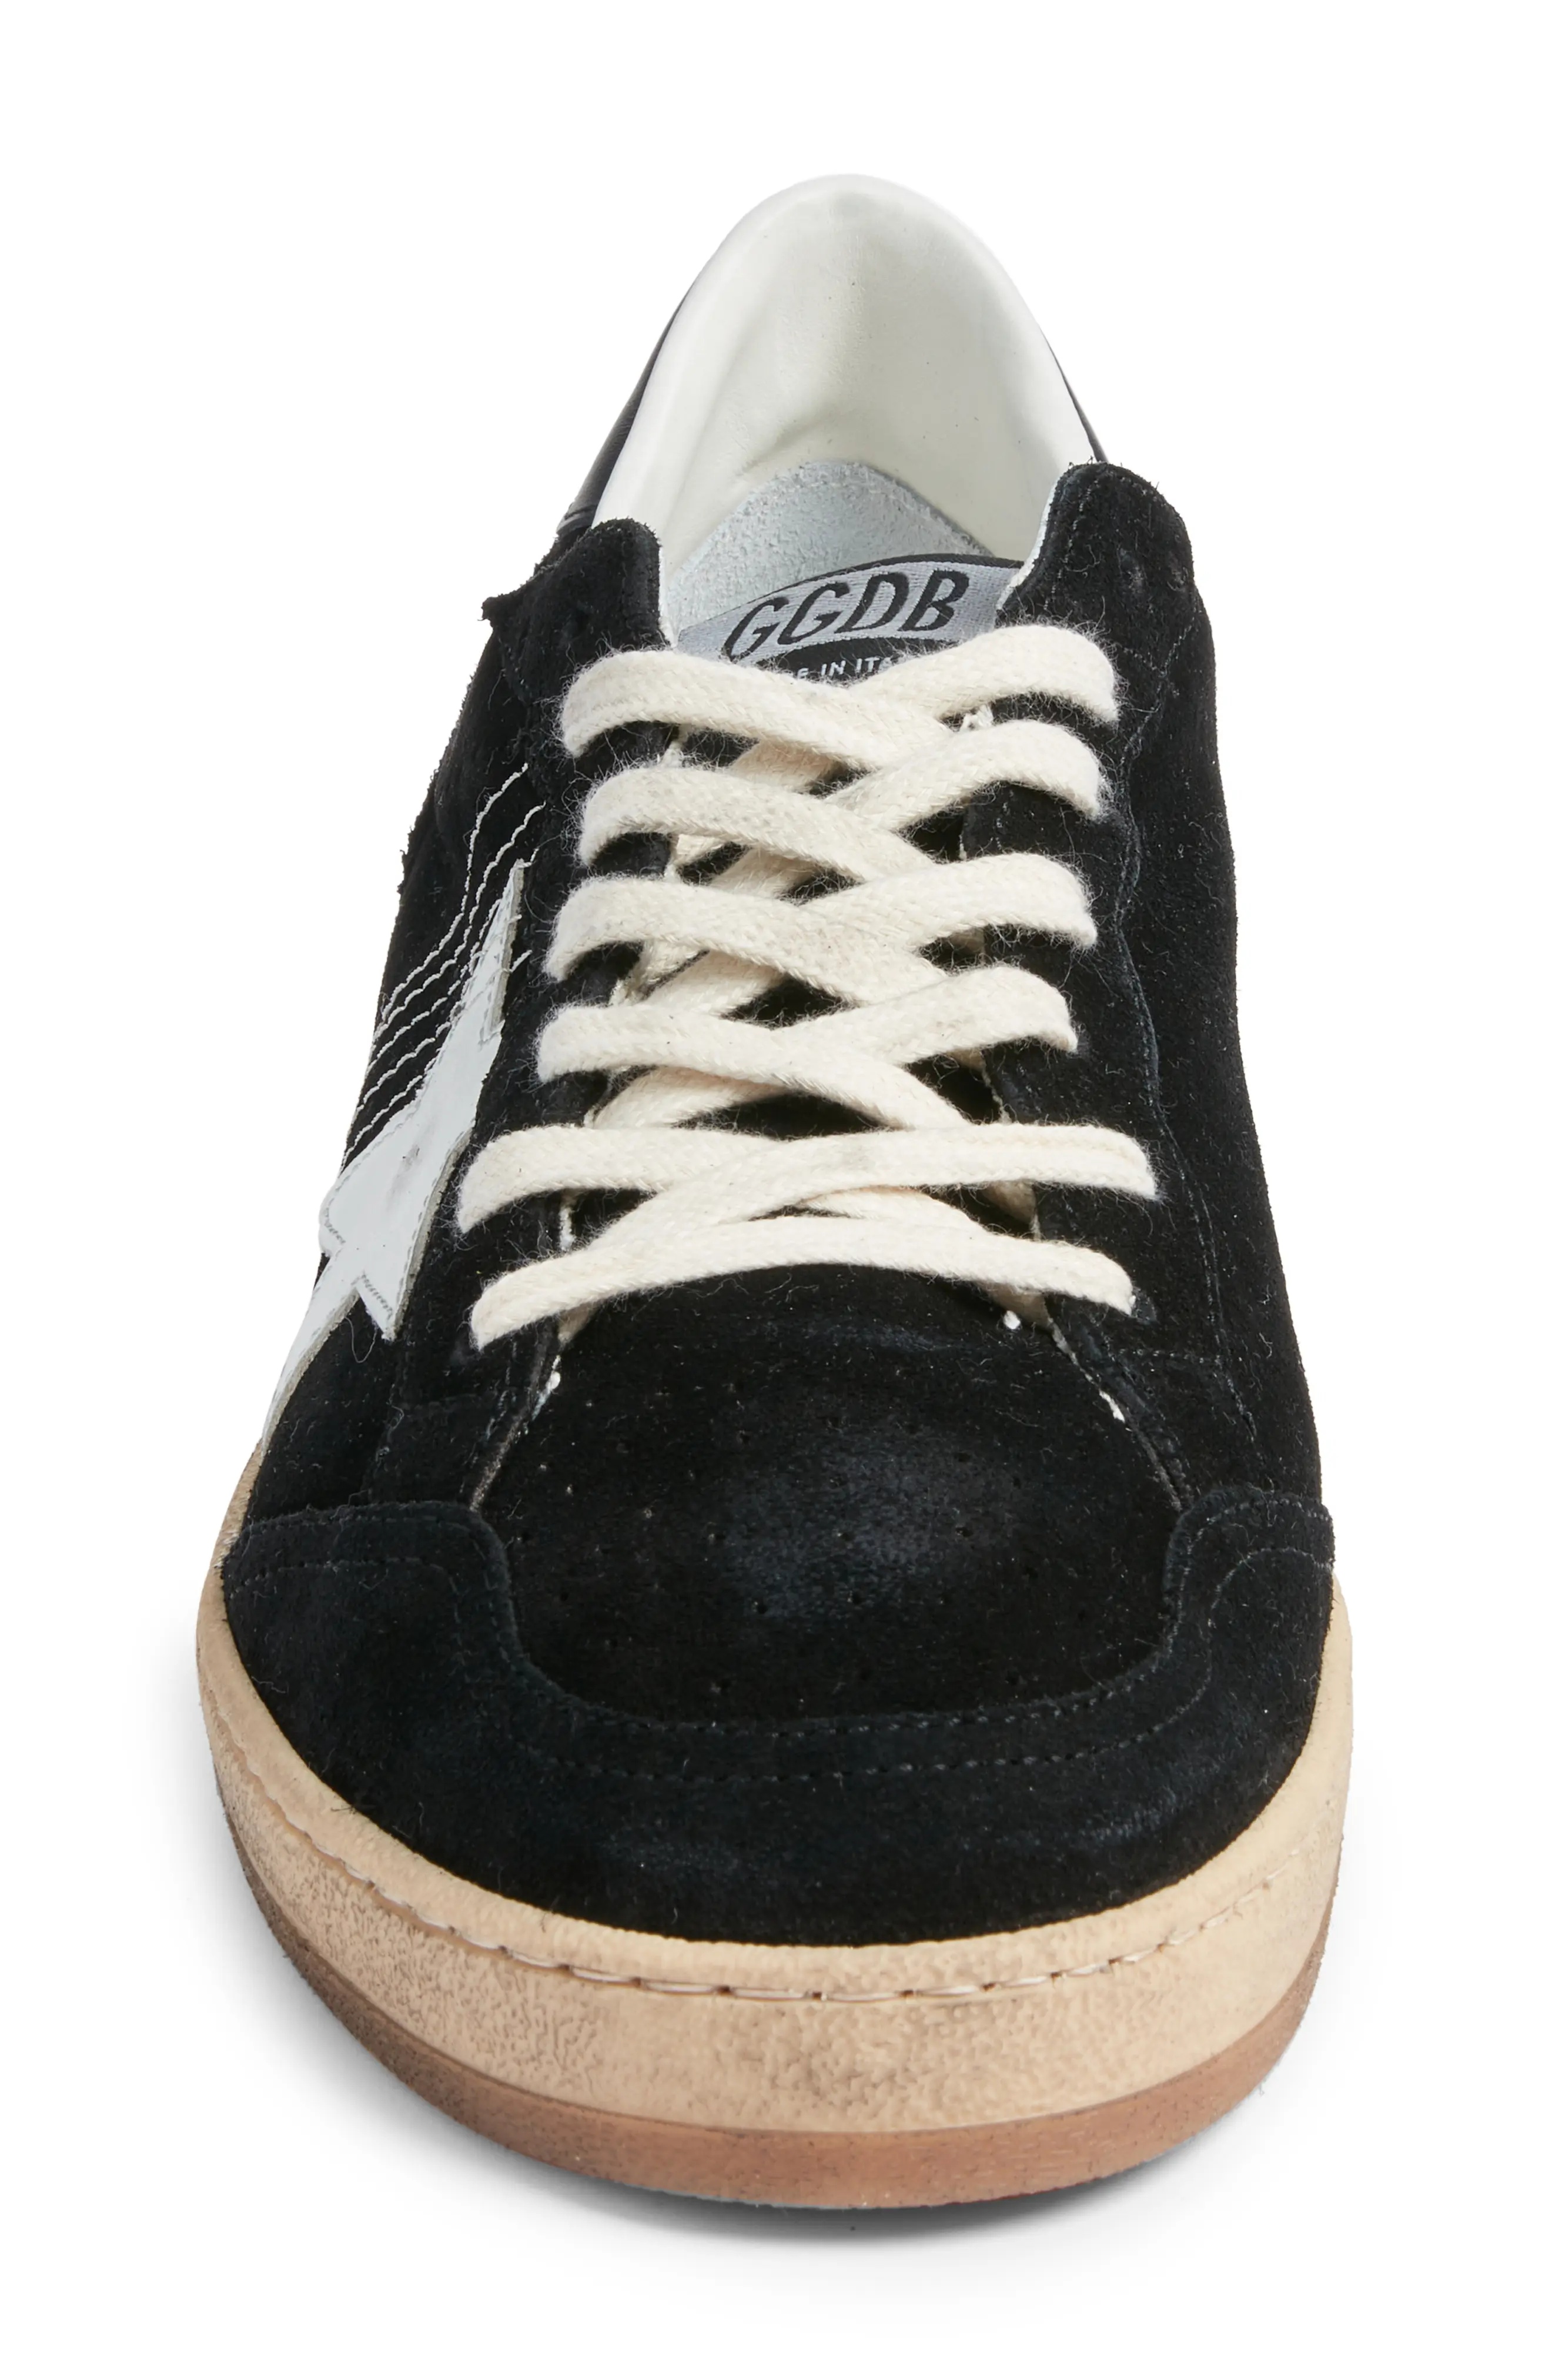 Ball Star Low Top Sneaker in Black/White - 4